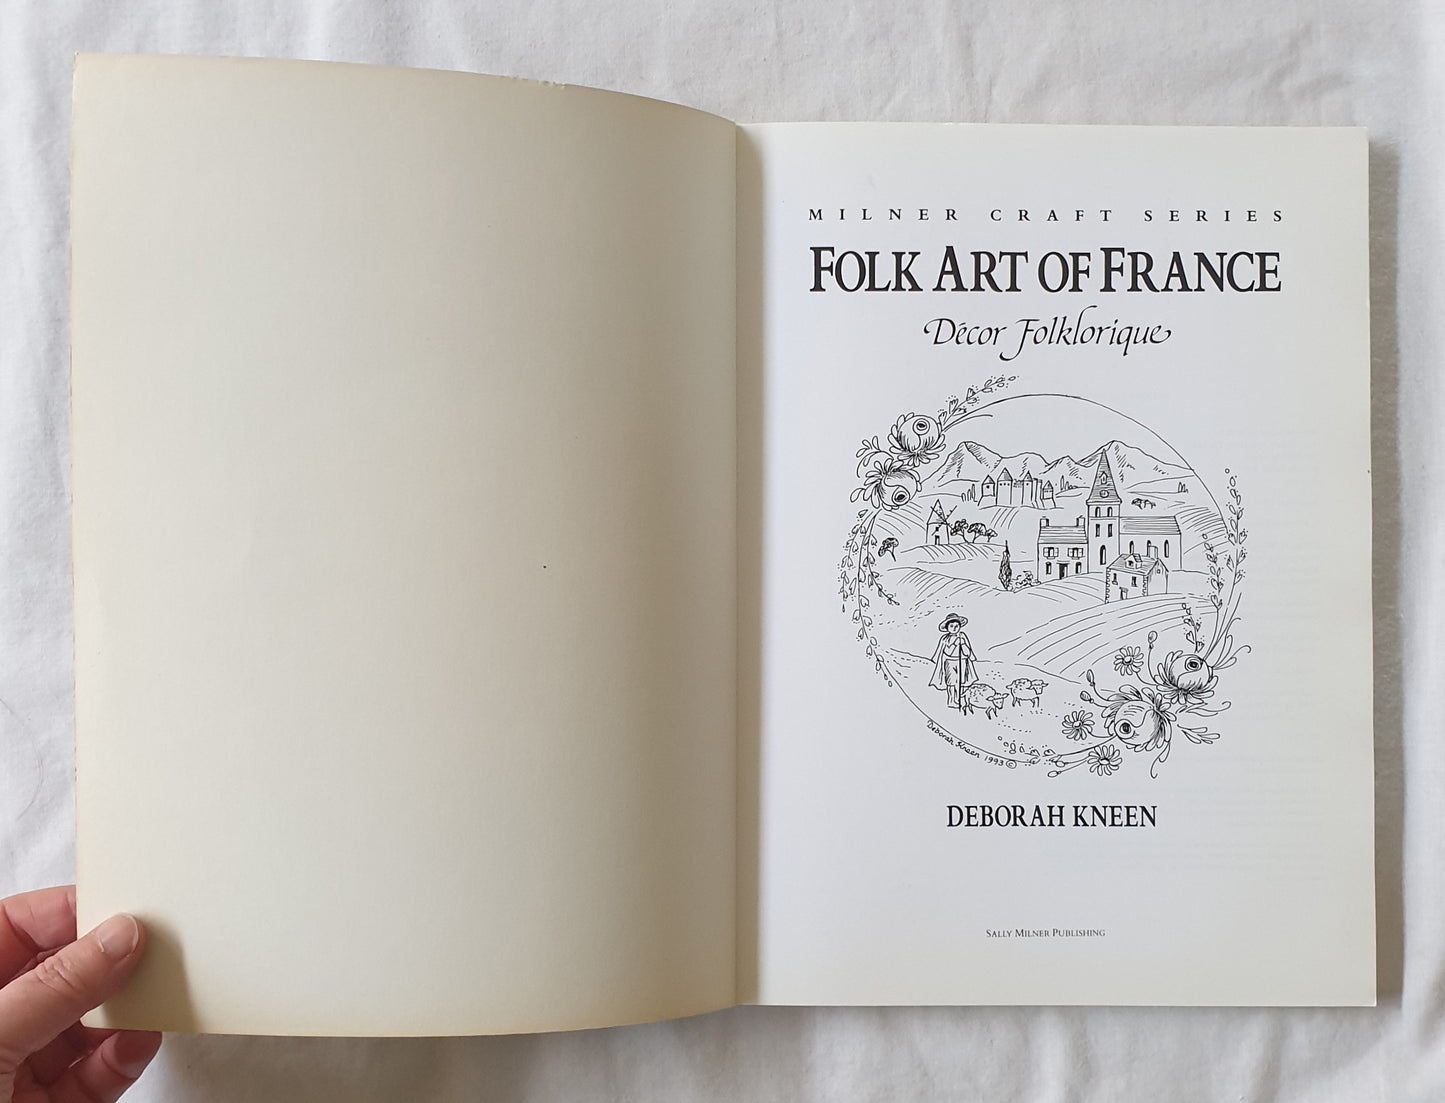 Folk Art of France by Deborah Kneen